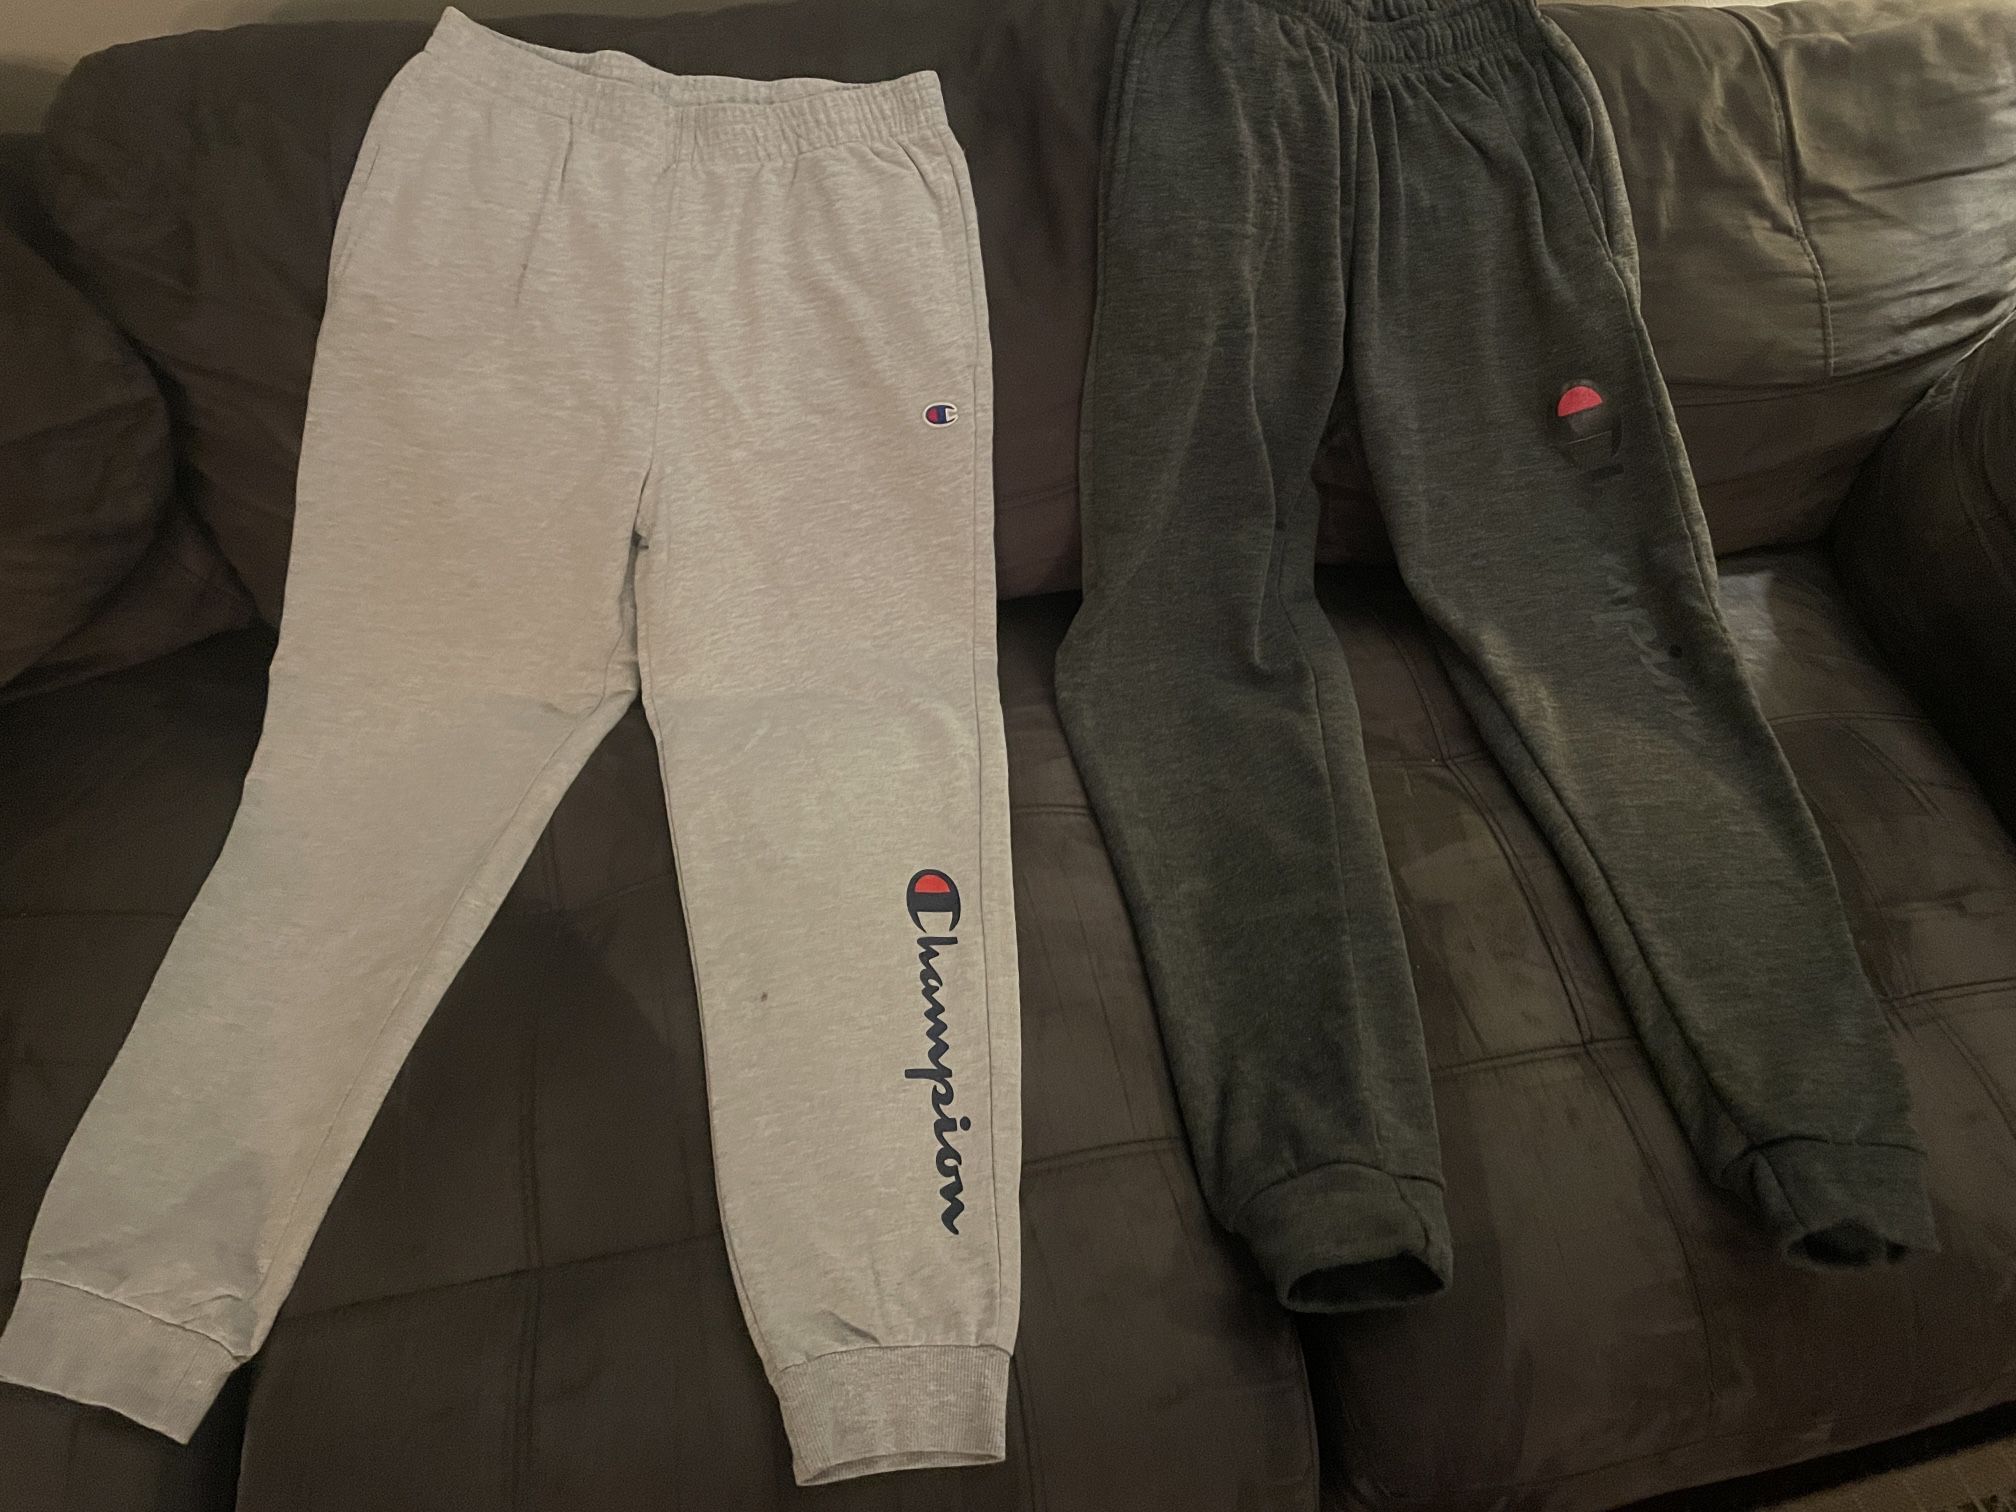 Champion sweat pants $15 for both 